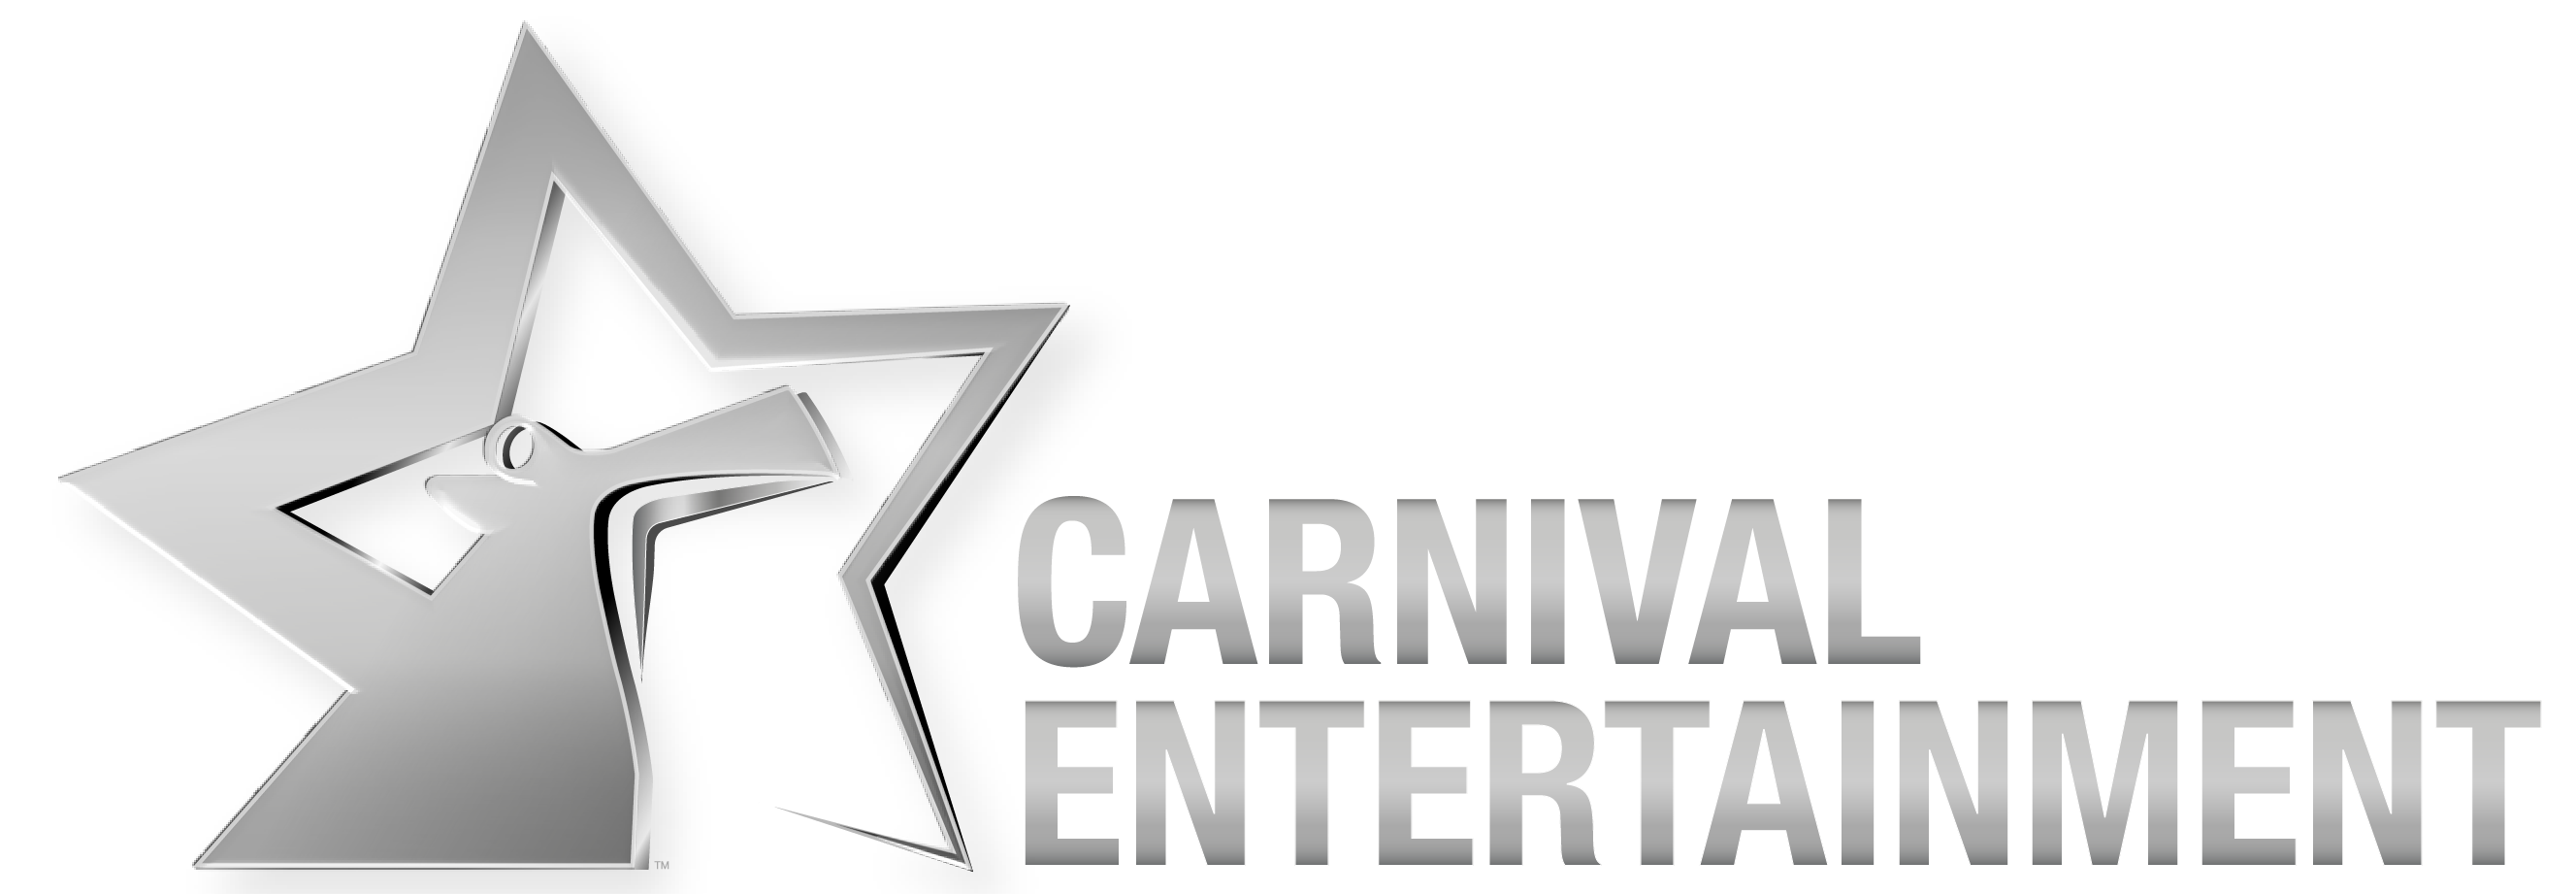 carnival cruise login rose